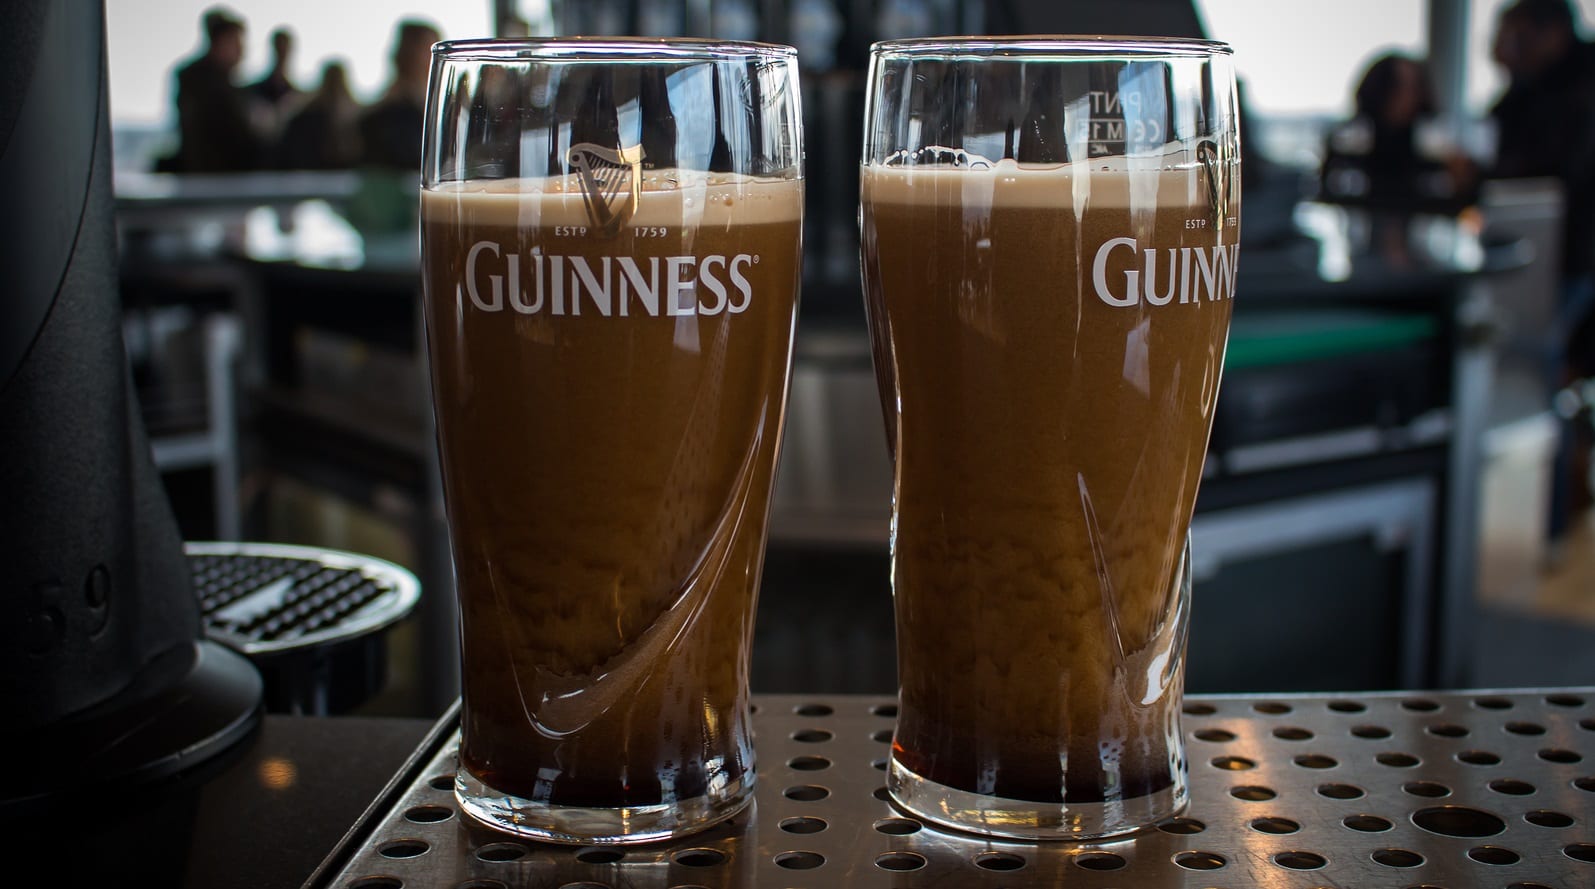 Pints of Guinness 